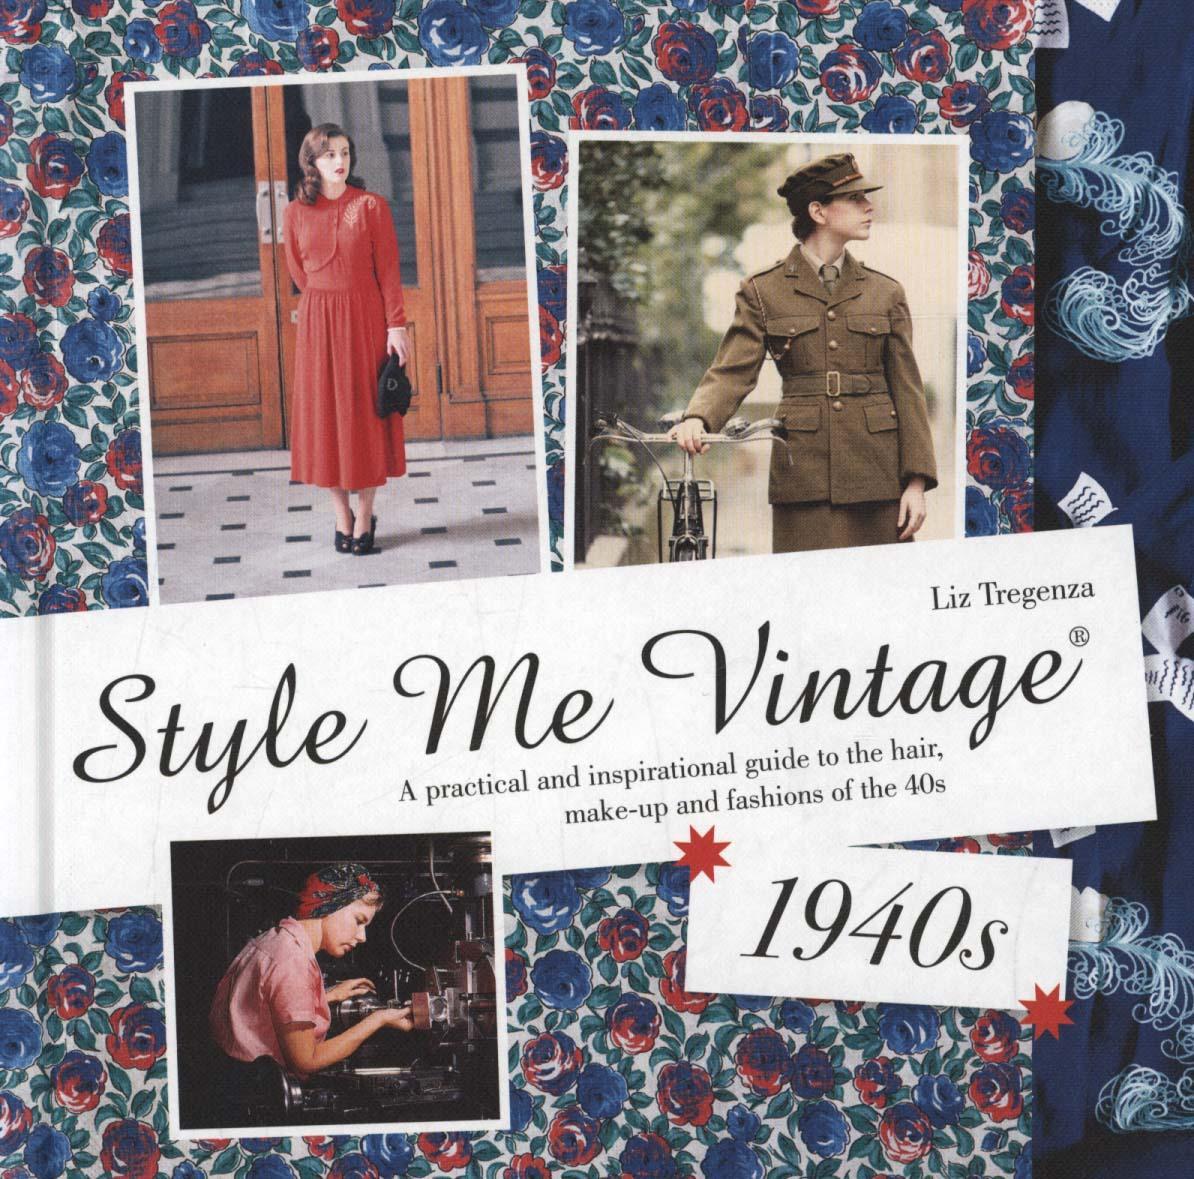 Style Me Vintage: 1940s